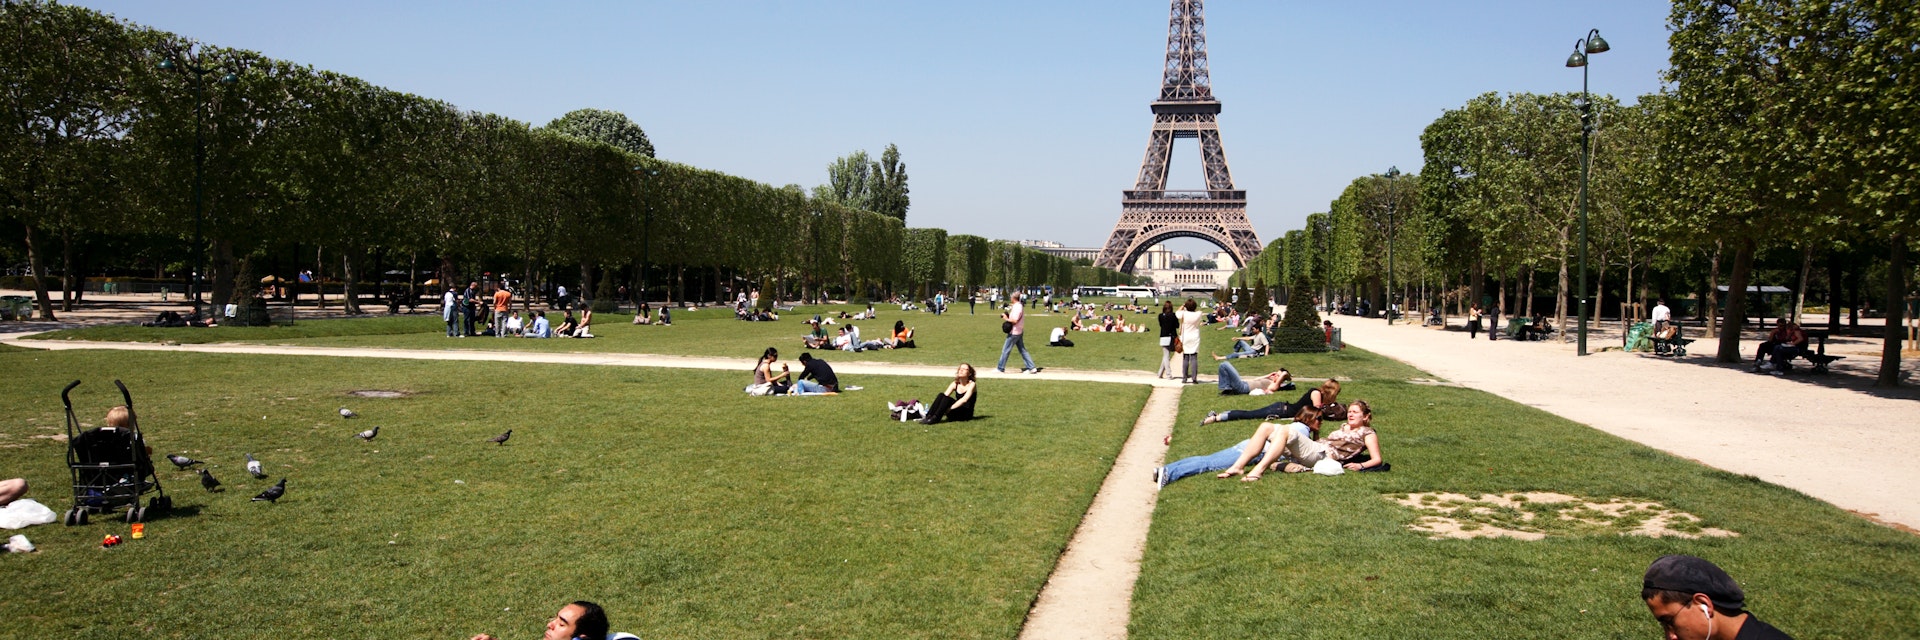 Parc du Champ de Mars with Eiffel Tower in background.